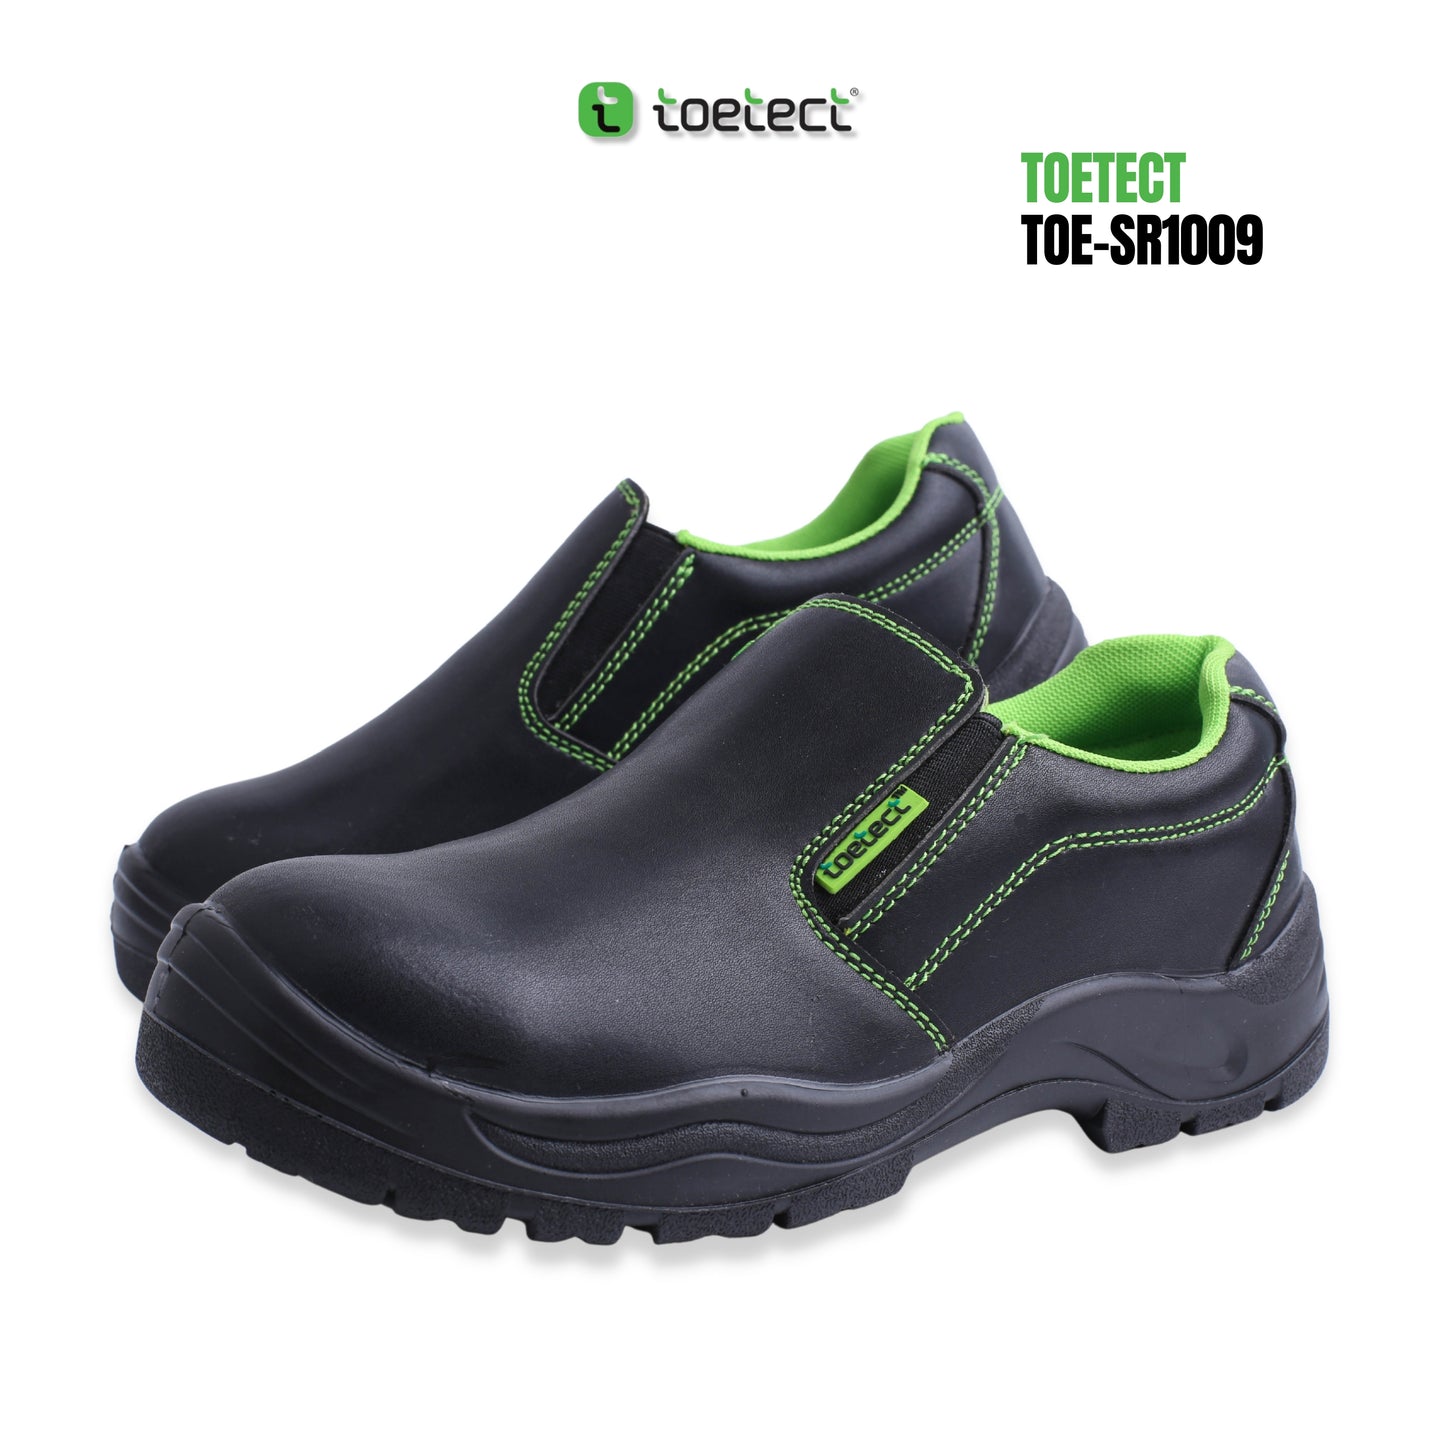 ToeTect TOE-SR1009 Men Low Cut Slip-on Safety Boots